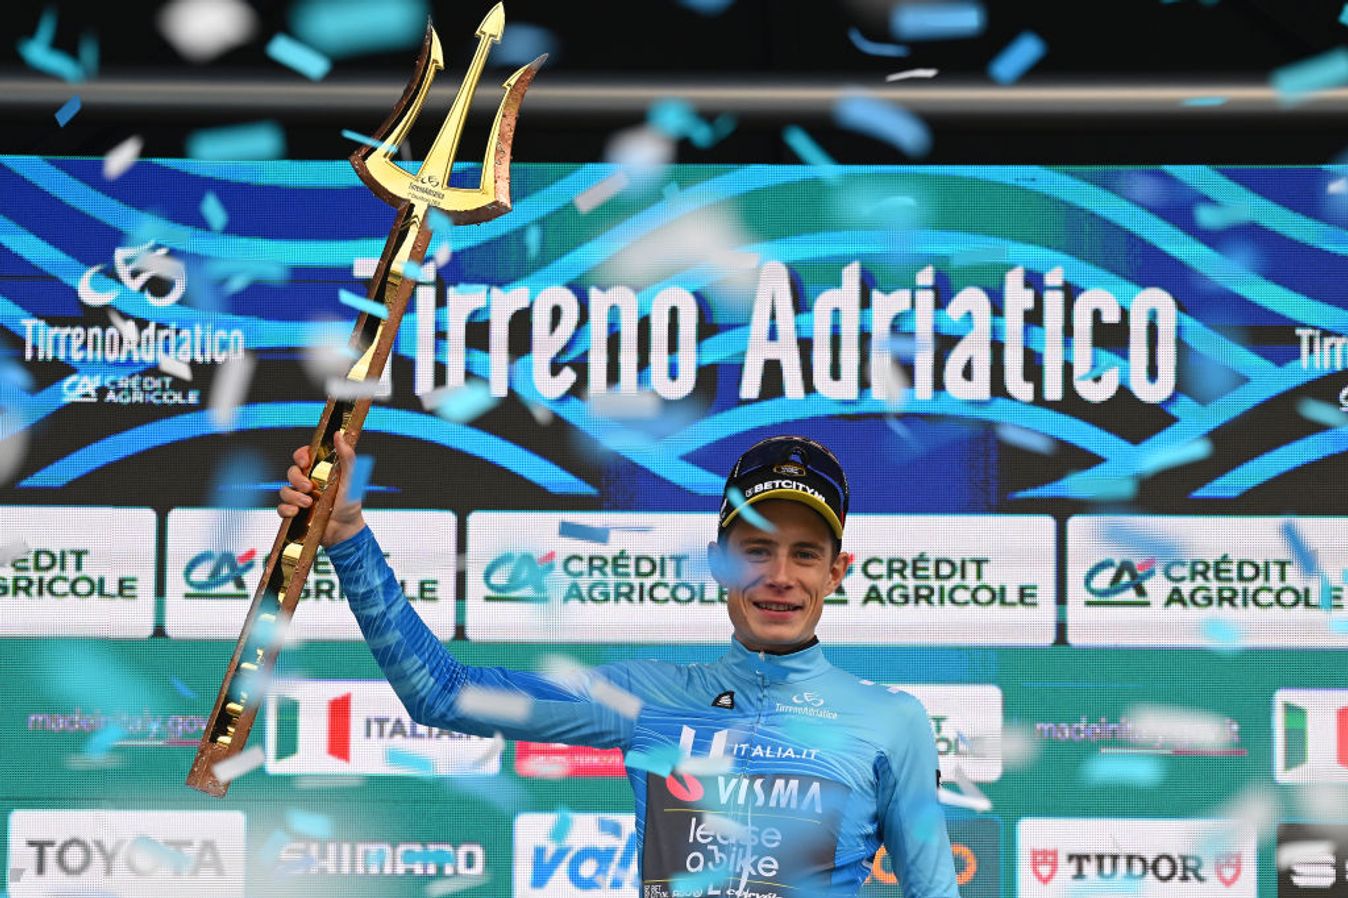 Jonas Vingegaard won the recent Tirreno-Adriatico